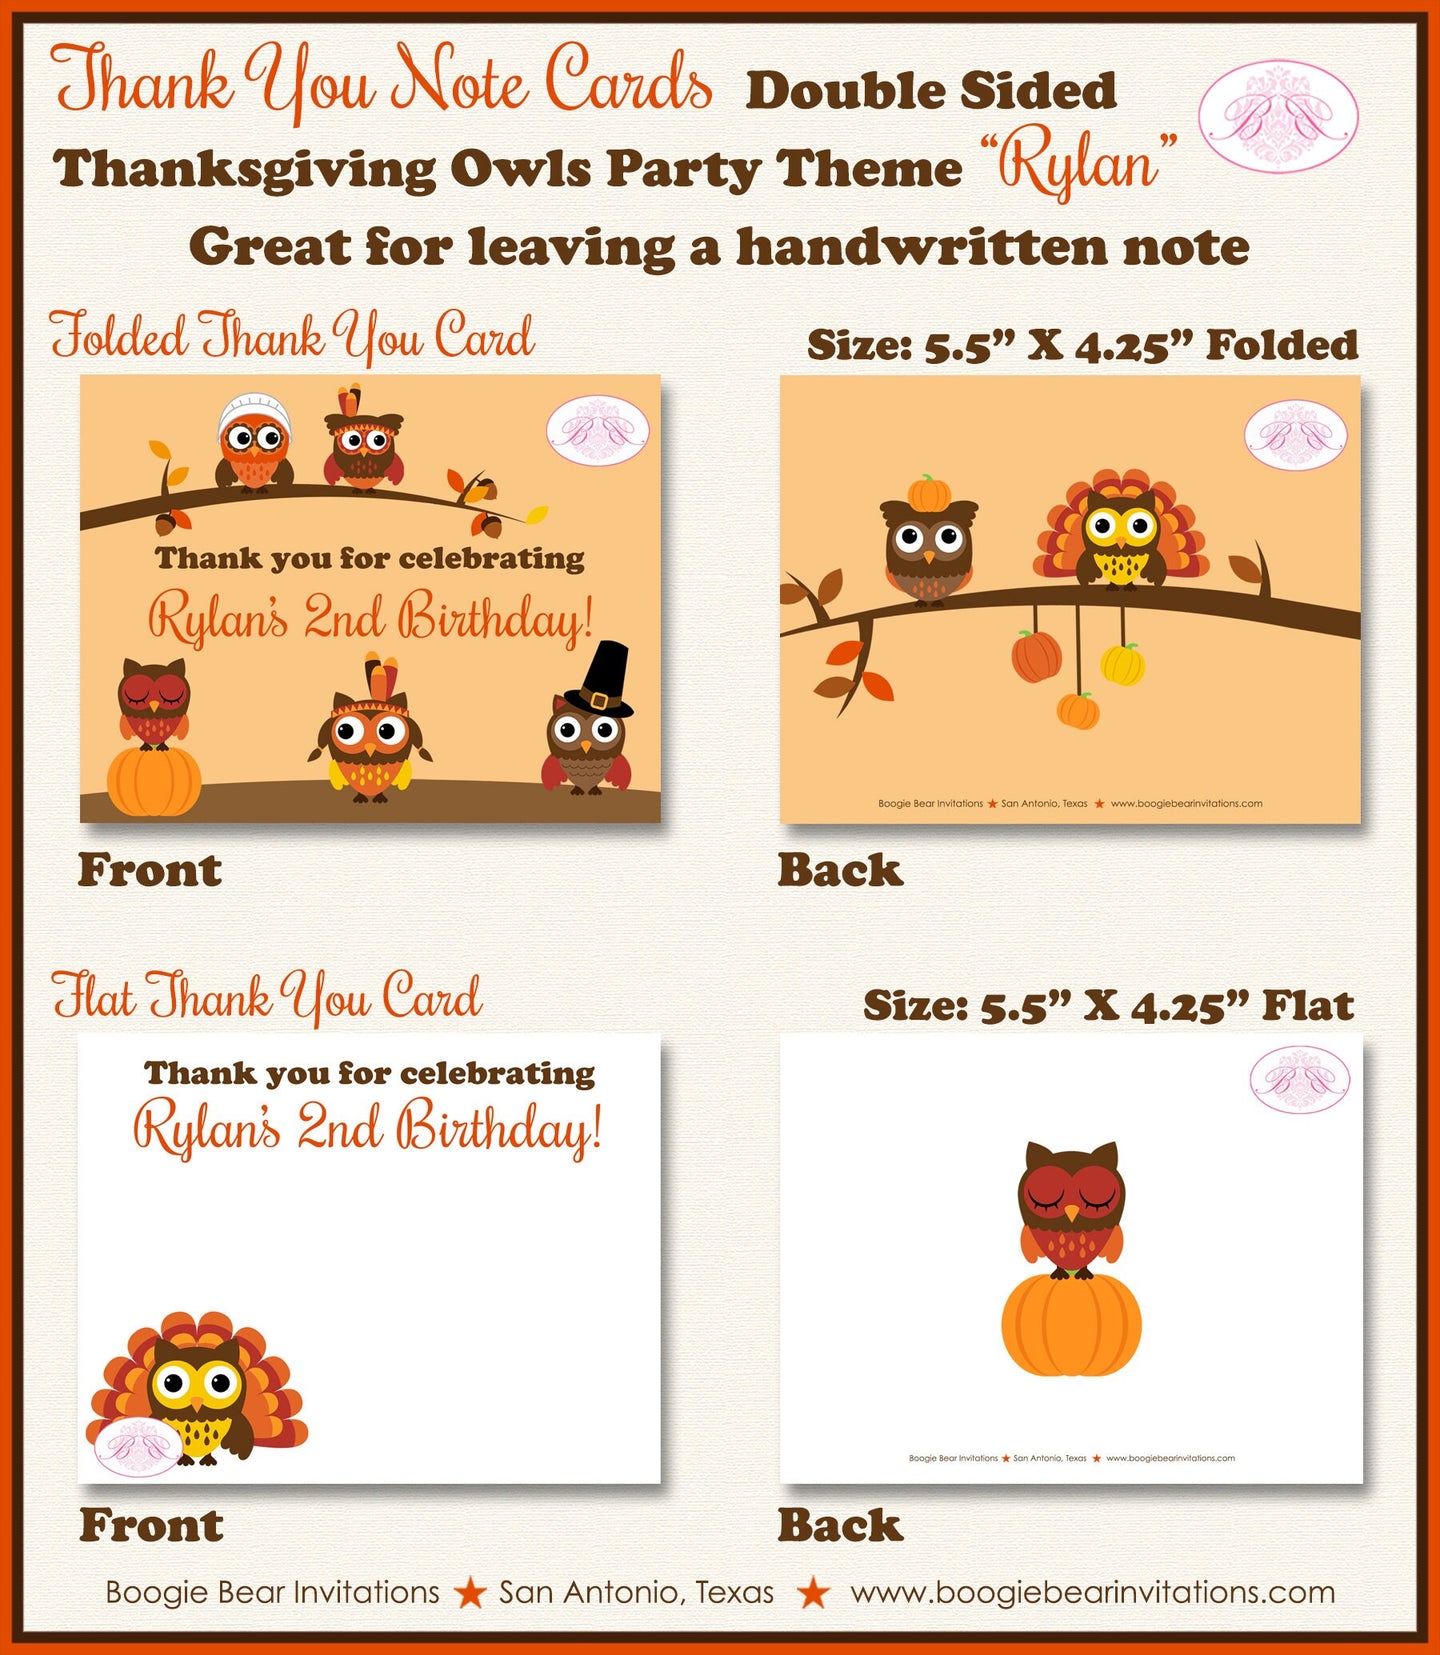 Thanksgiving Owls Party Thank You Card Birthday Girl Boy Turkey Woodland Animals Fall Autumn Fly Boogie Bear Invitations Rylan Theme Printed